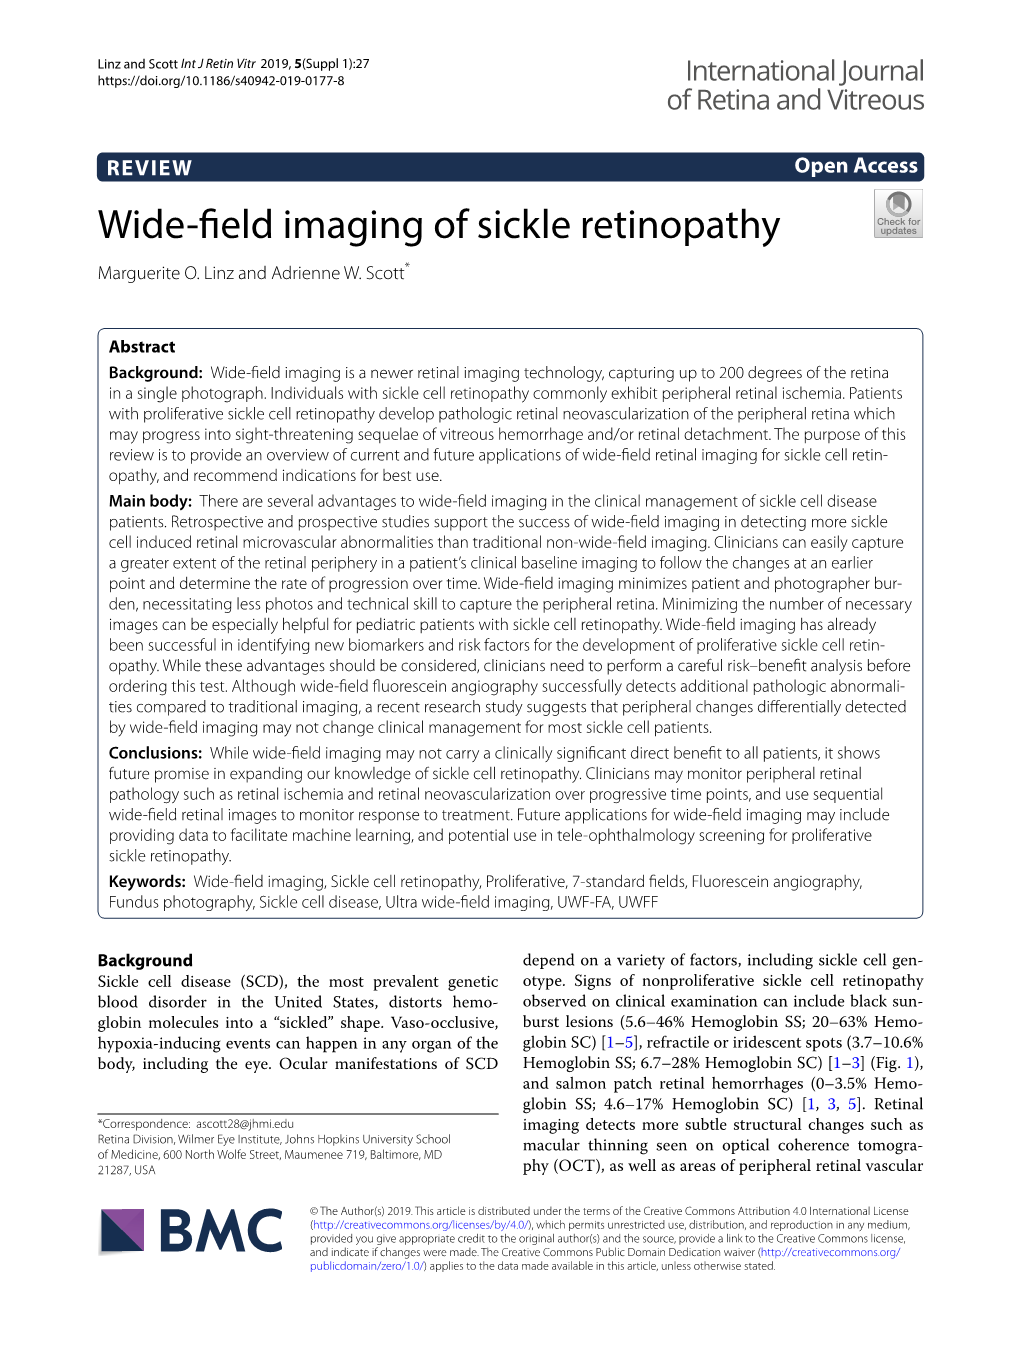 Wide-Field Imaging of Sickle Retinopathy